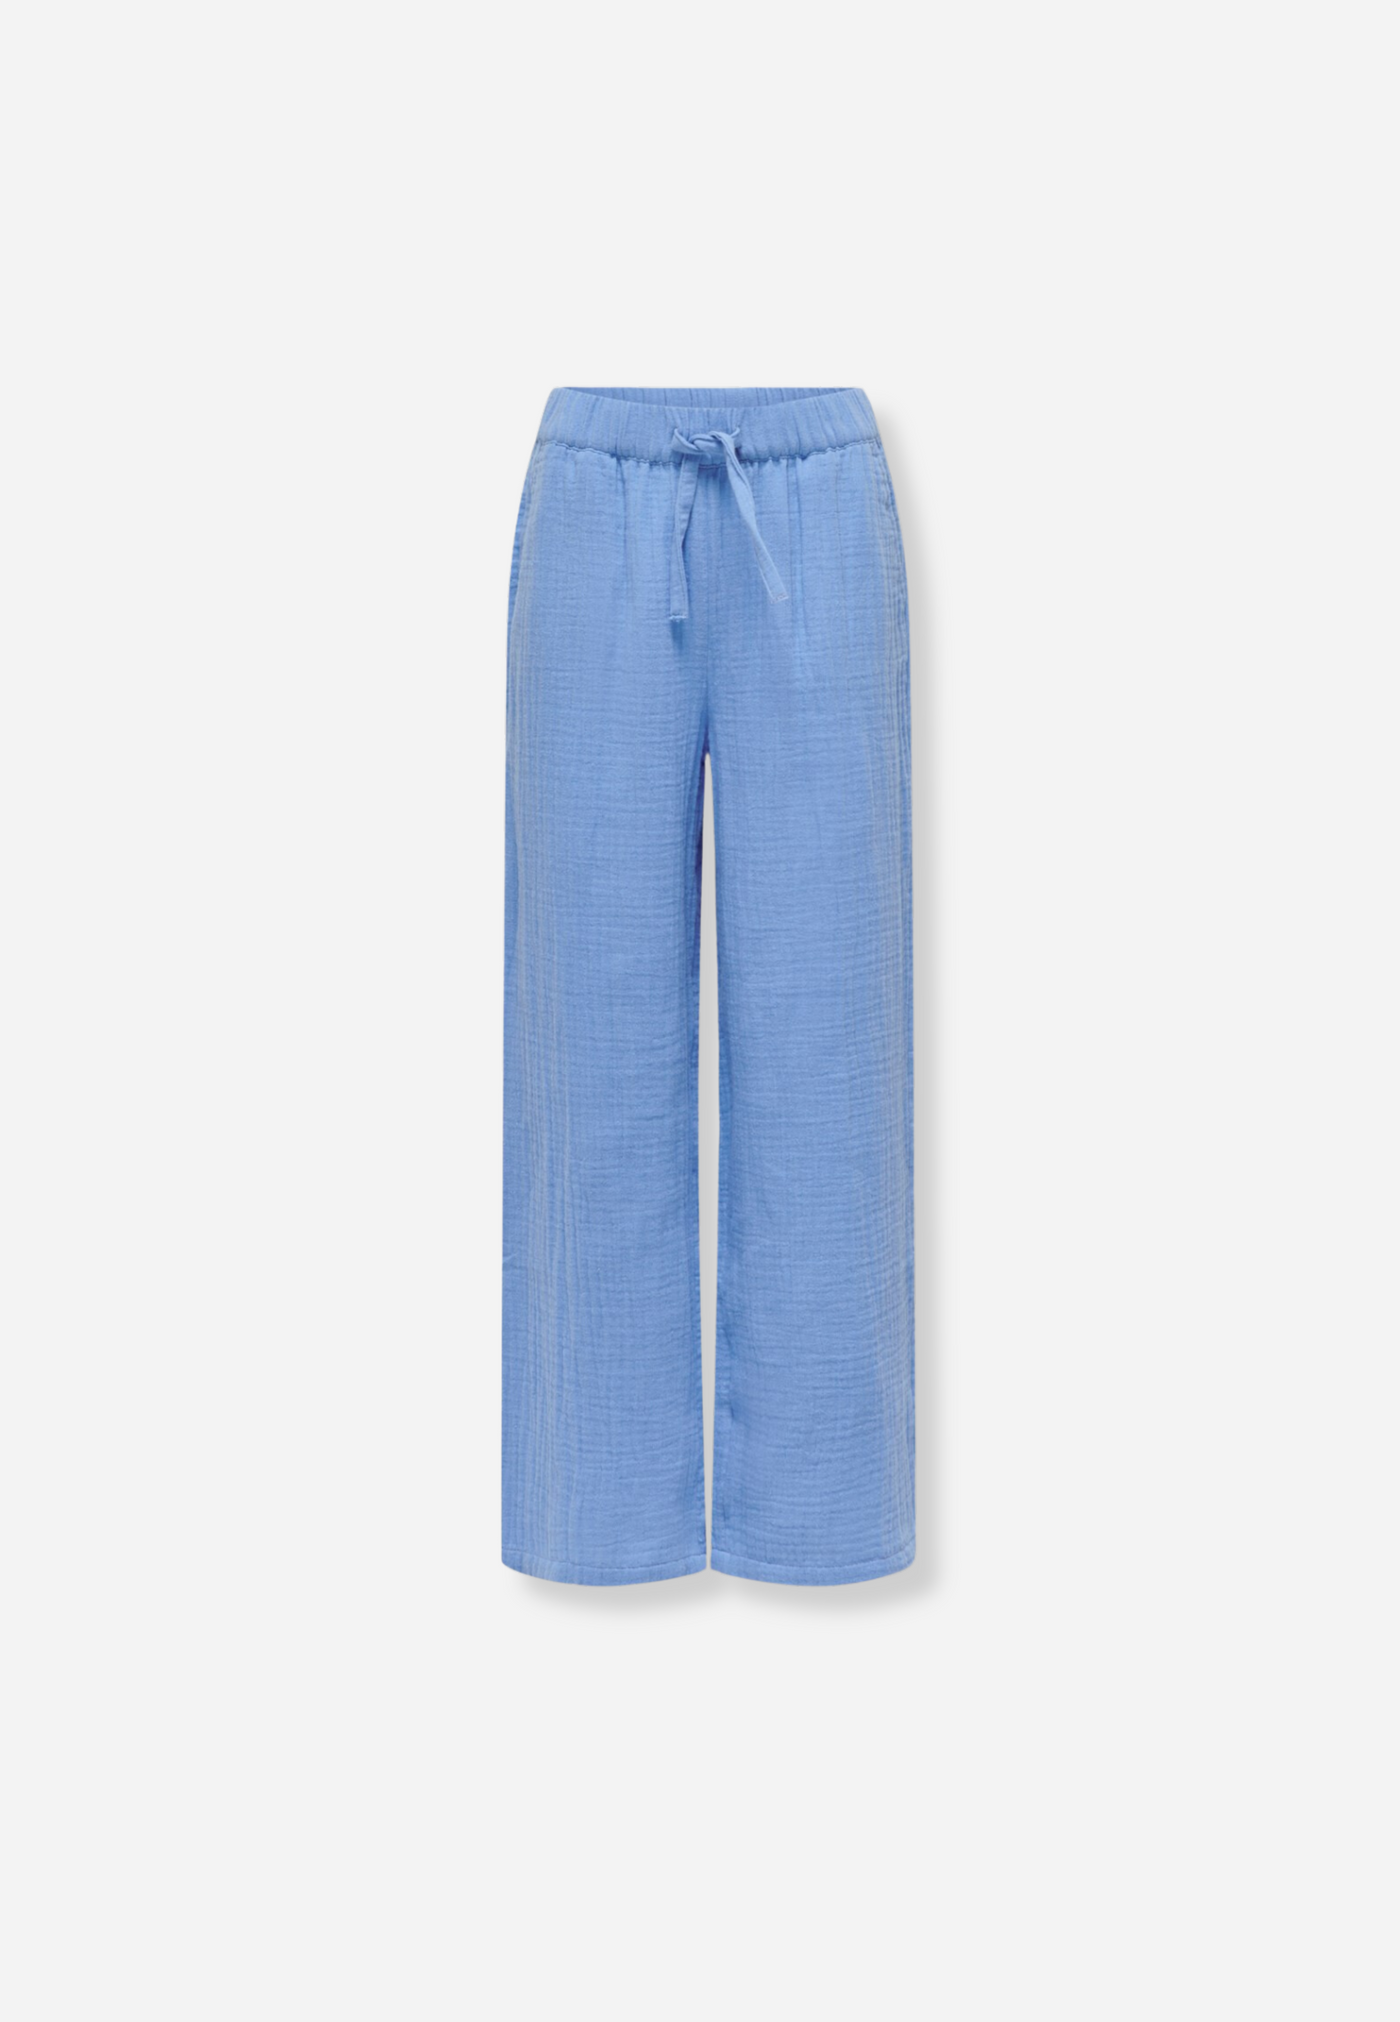 KOGTHYRA LONG PANTS - BLISSFUL BLUE